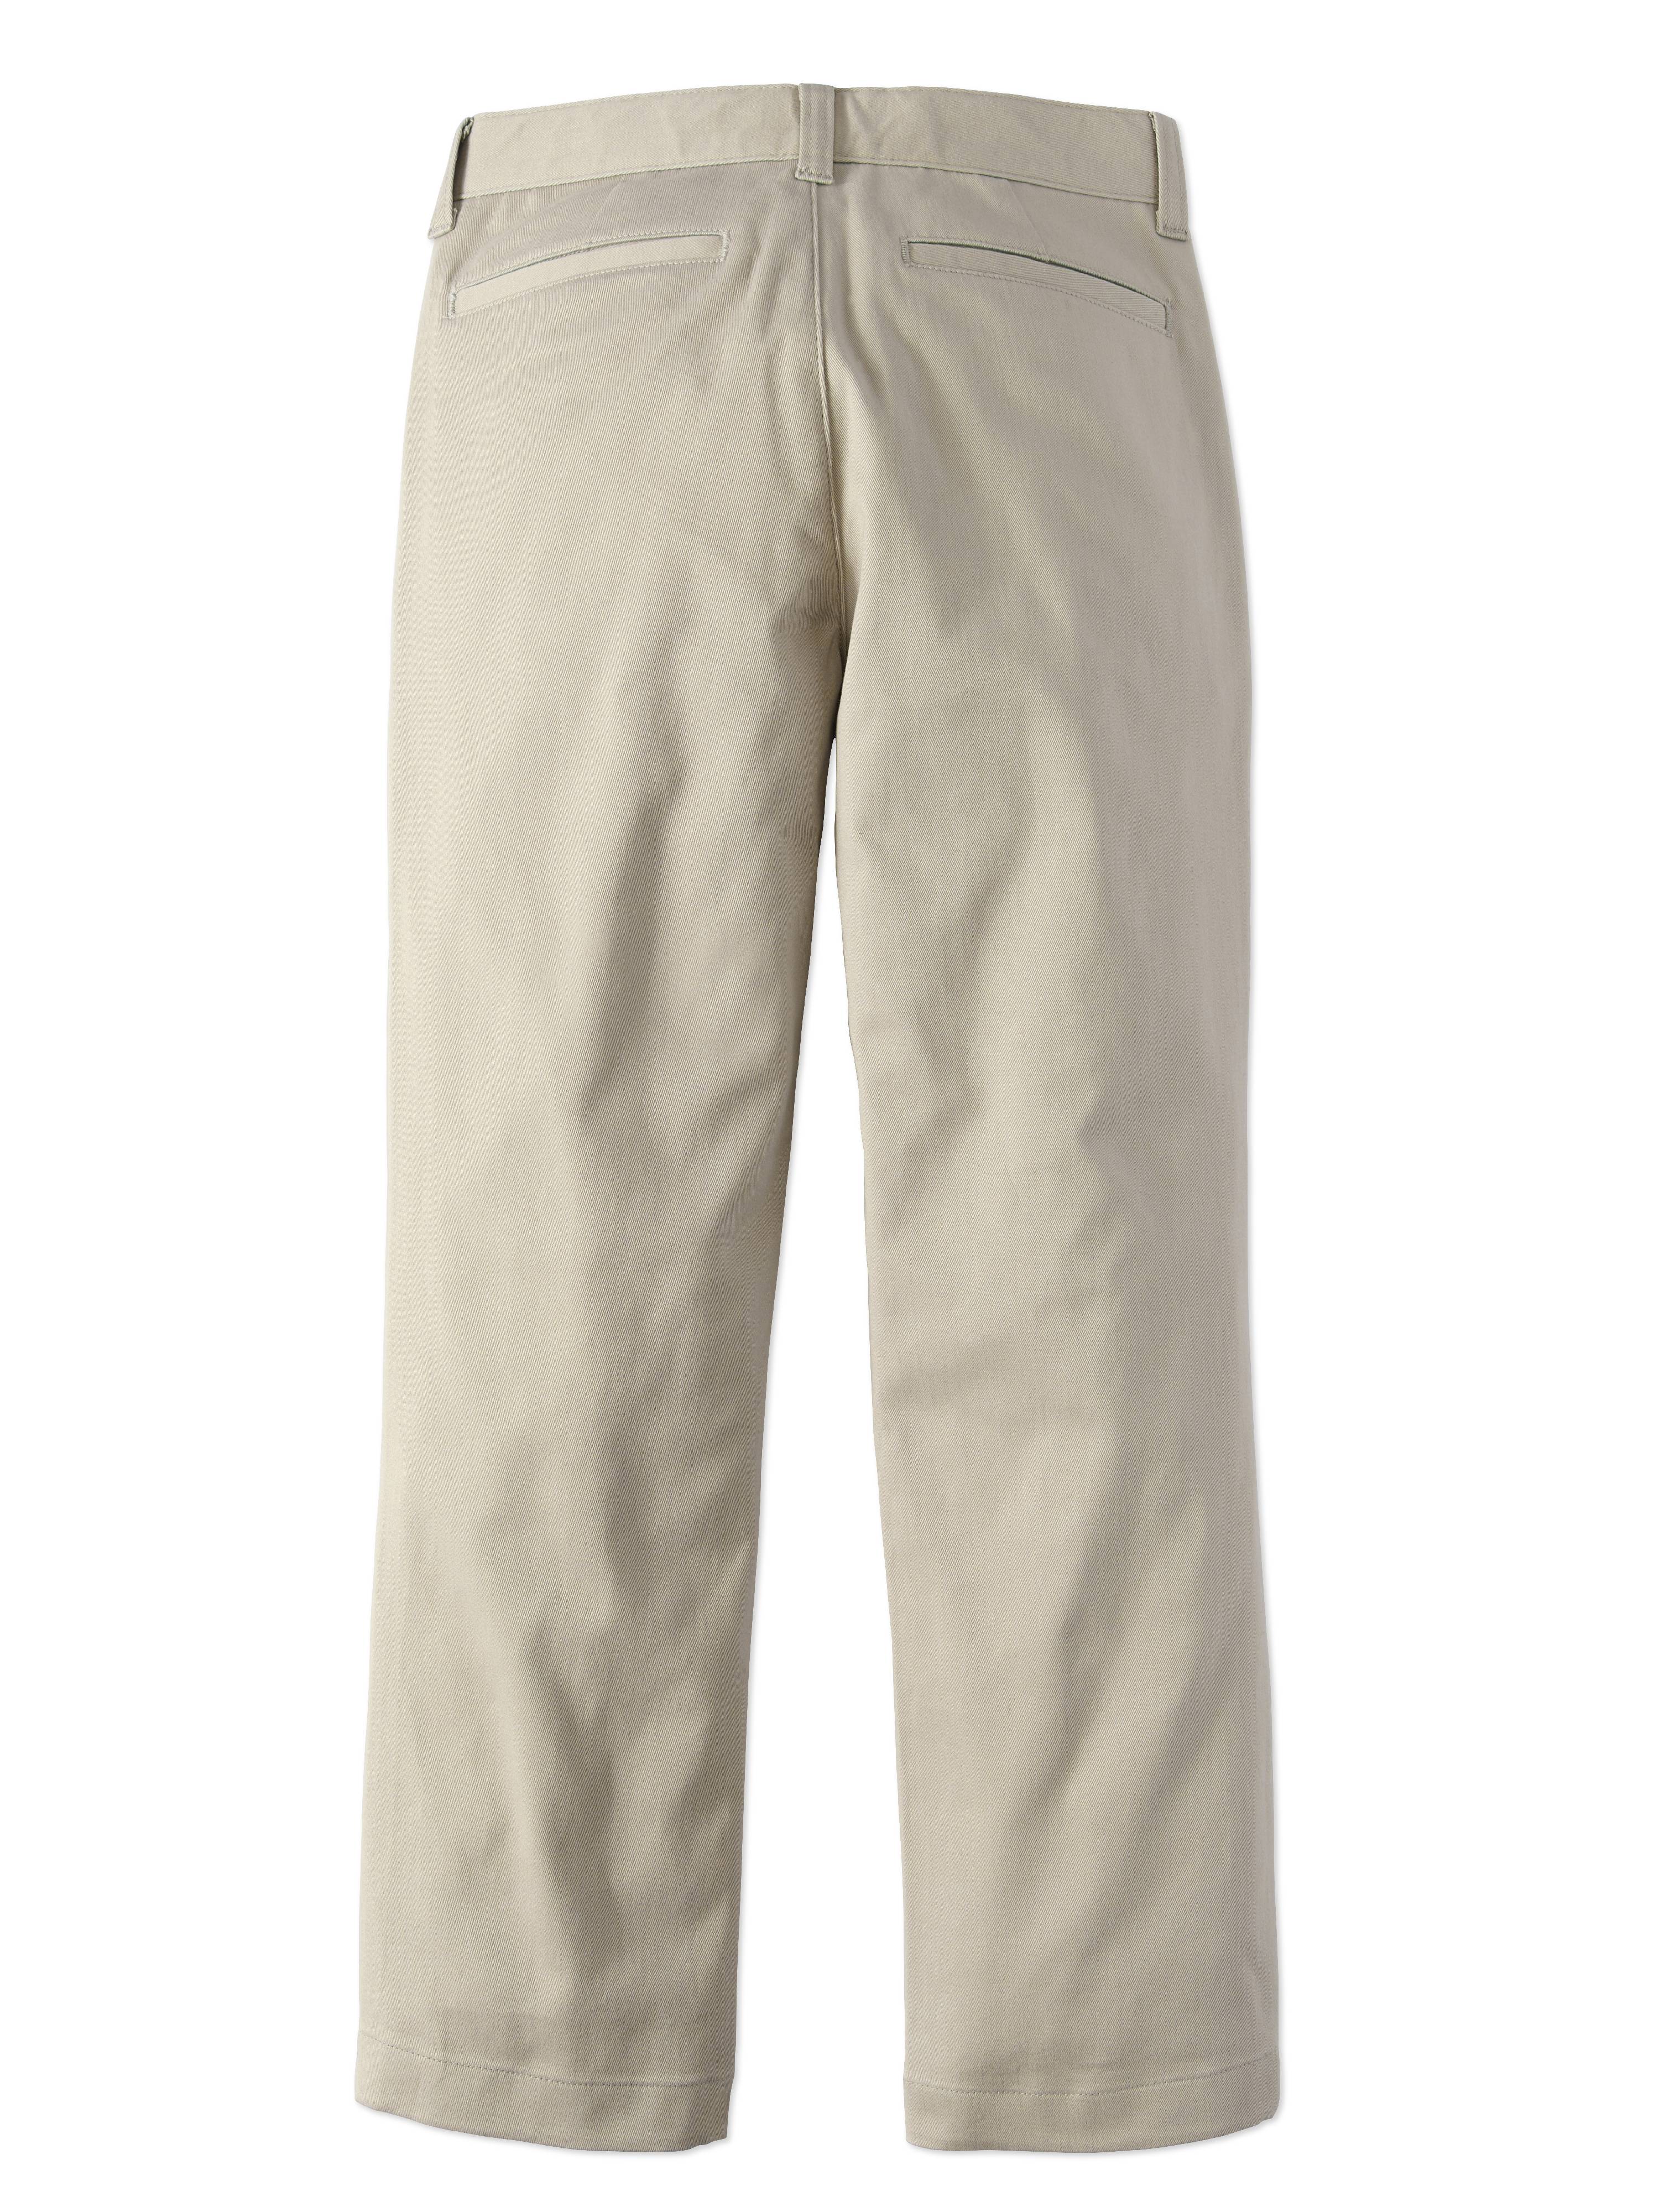 Wonder Nation Boys School Uniform Super Soft Stretch Twill Flat Front Pants, Sizes 4-22, Slim, & Husky - image 3 of 4